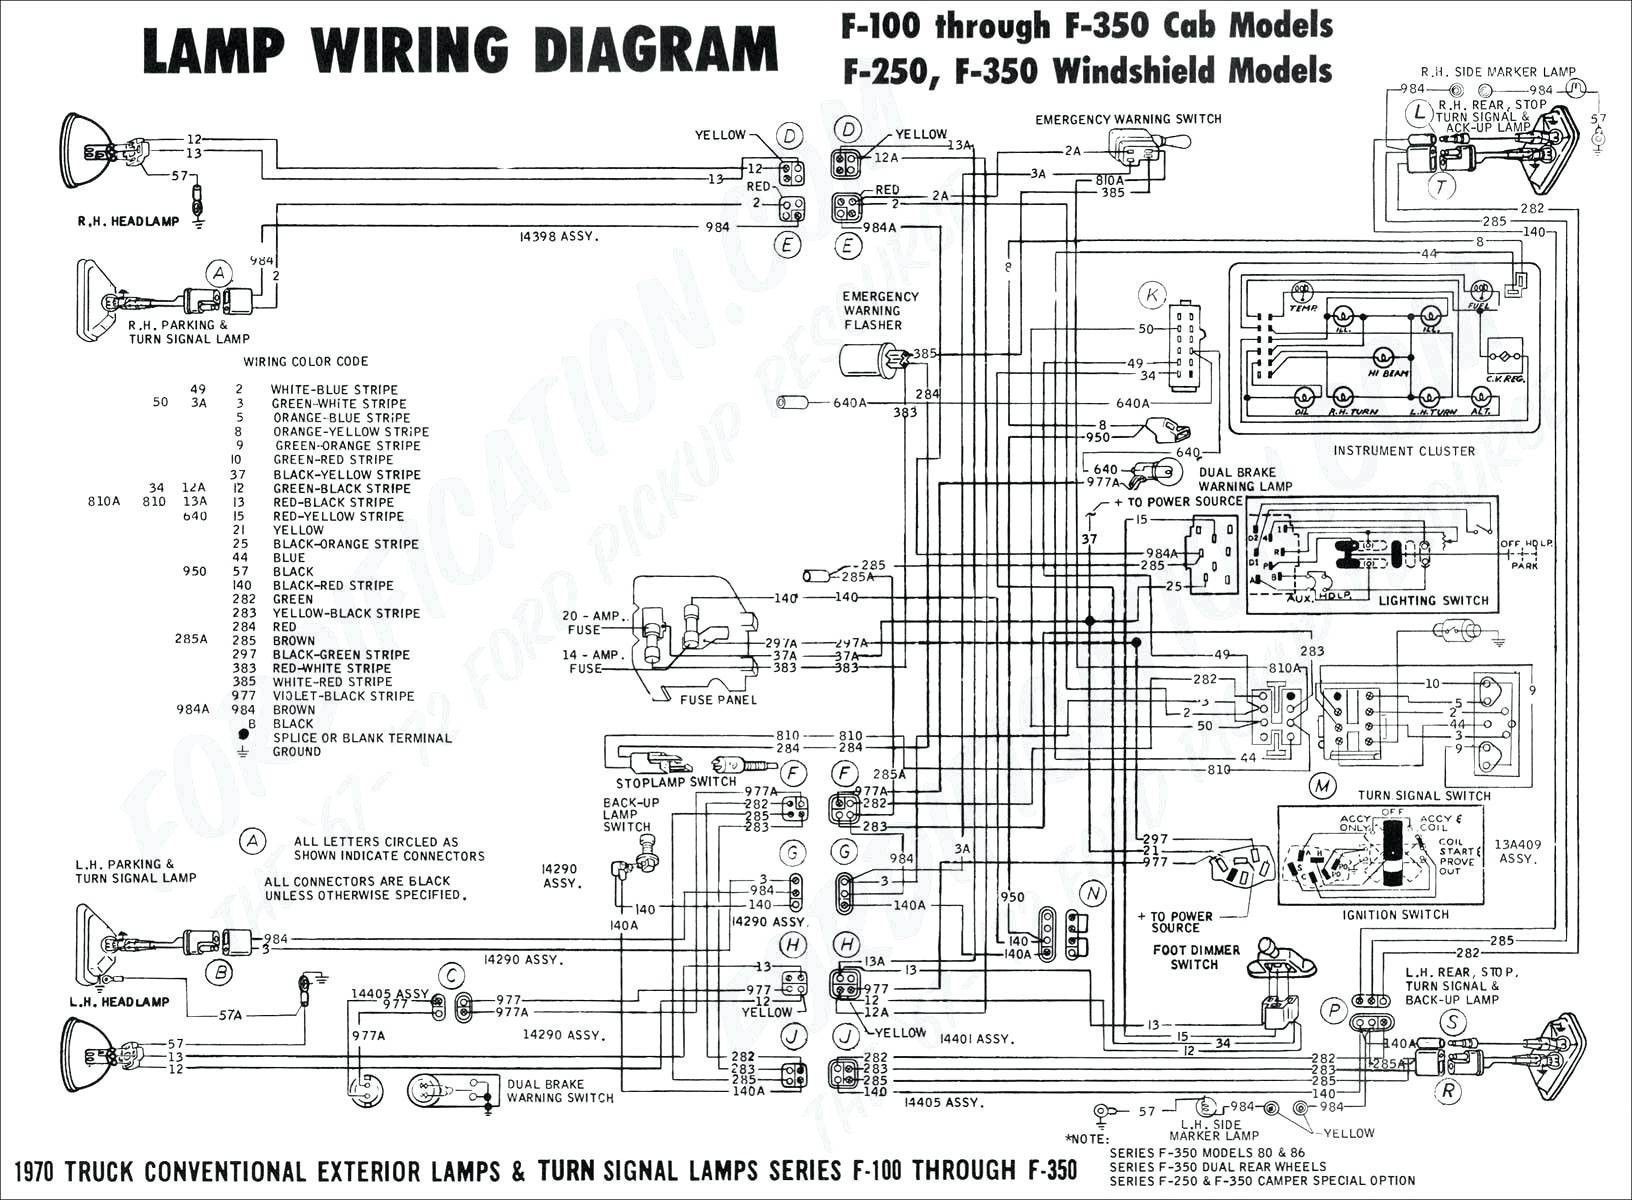 Grote Lights Wiring Diagram Ol 8354] Travel Trailer Power Wiring Diagram Download Diagram Of Grote Lights Wiring Diagram